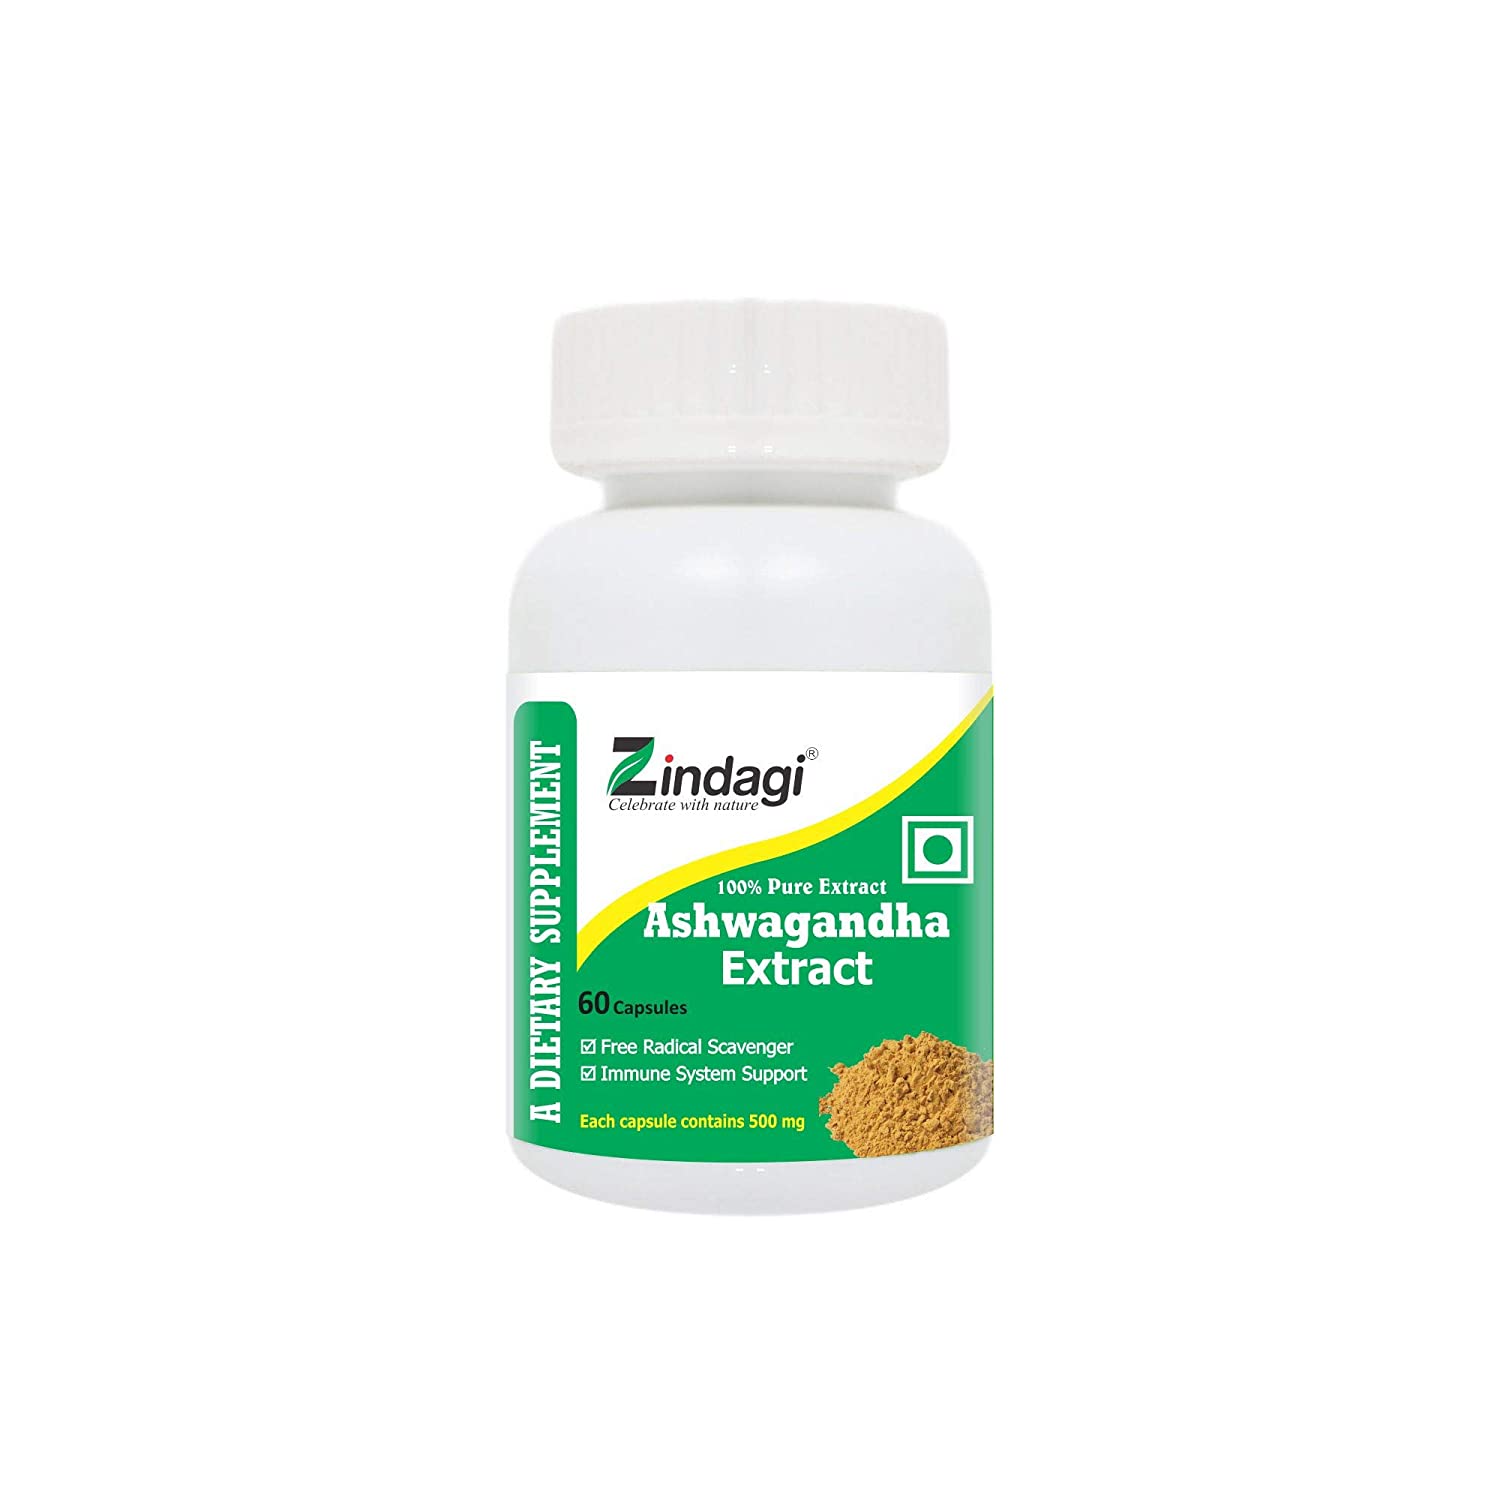 Buy Zindagi 100% Pure Ashwagandha Extract Capsules - Herbal Health Supplement For Diabetic (60 Capsules) at Best Price Online